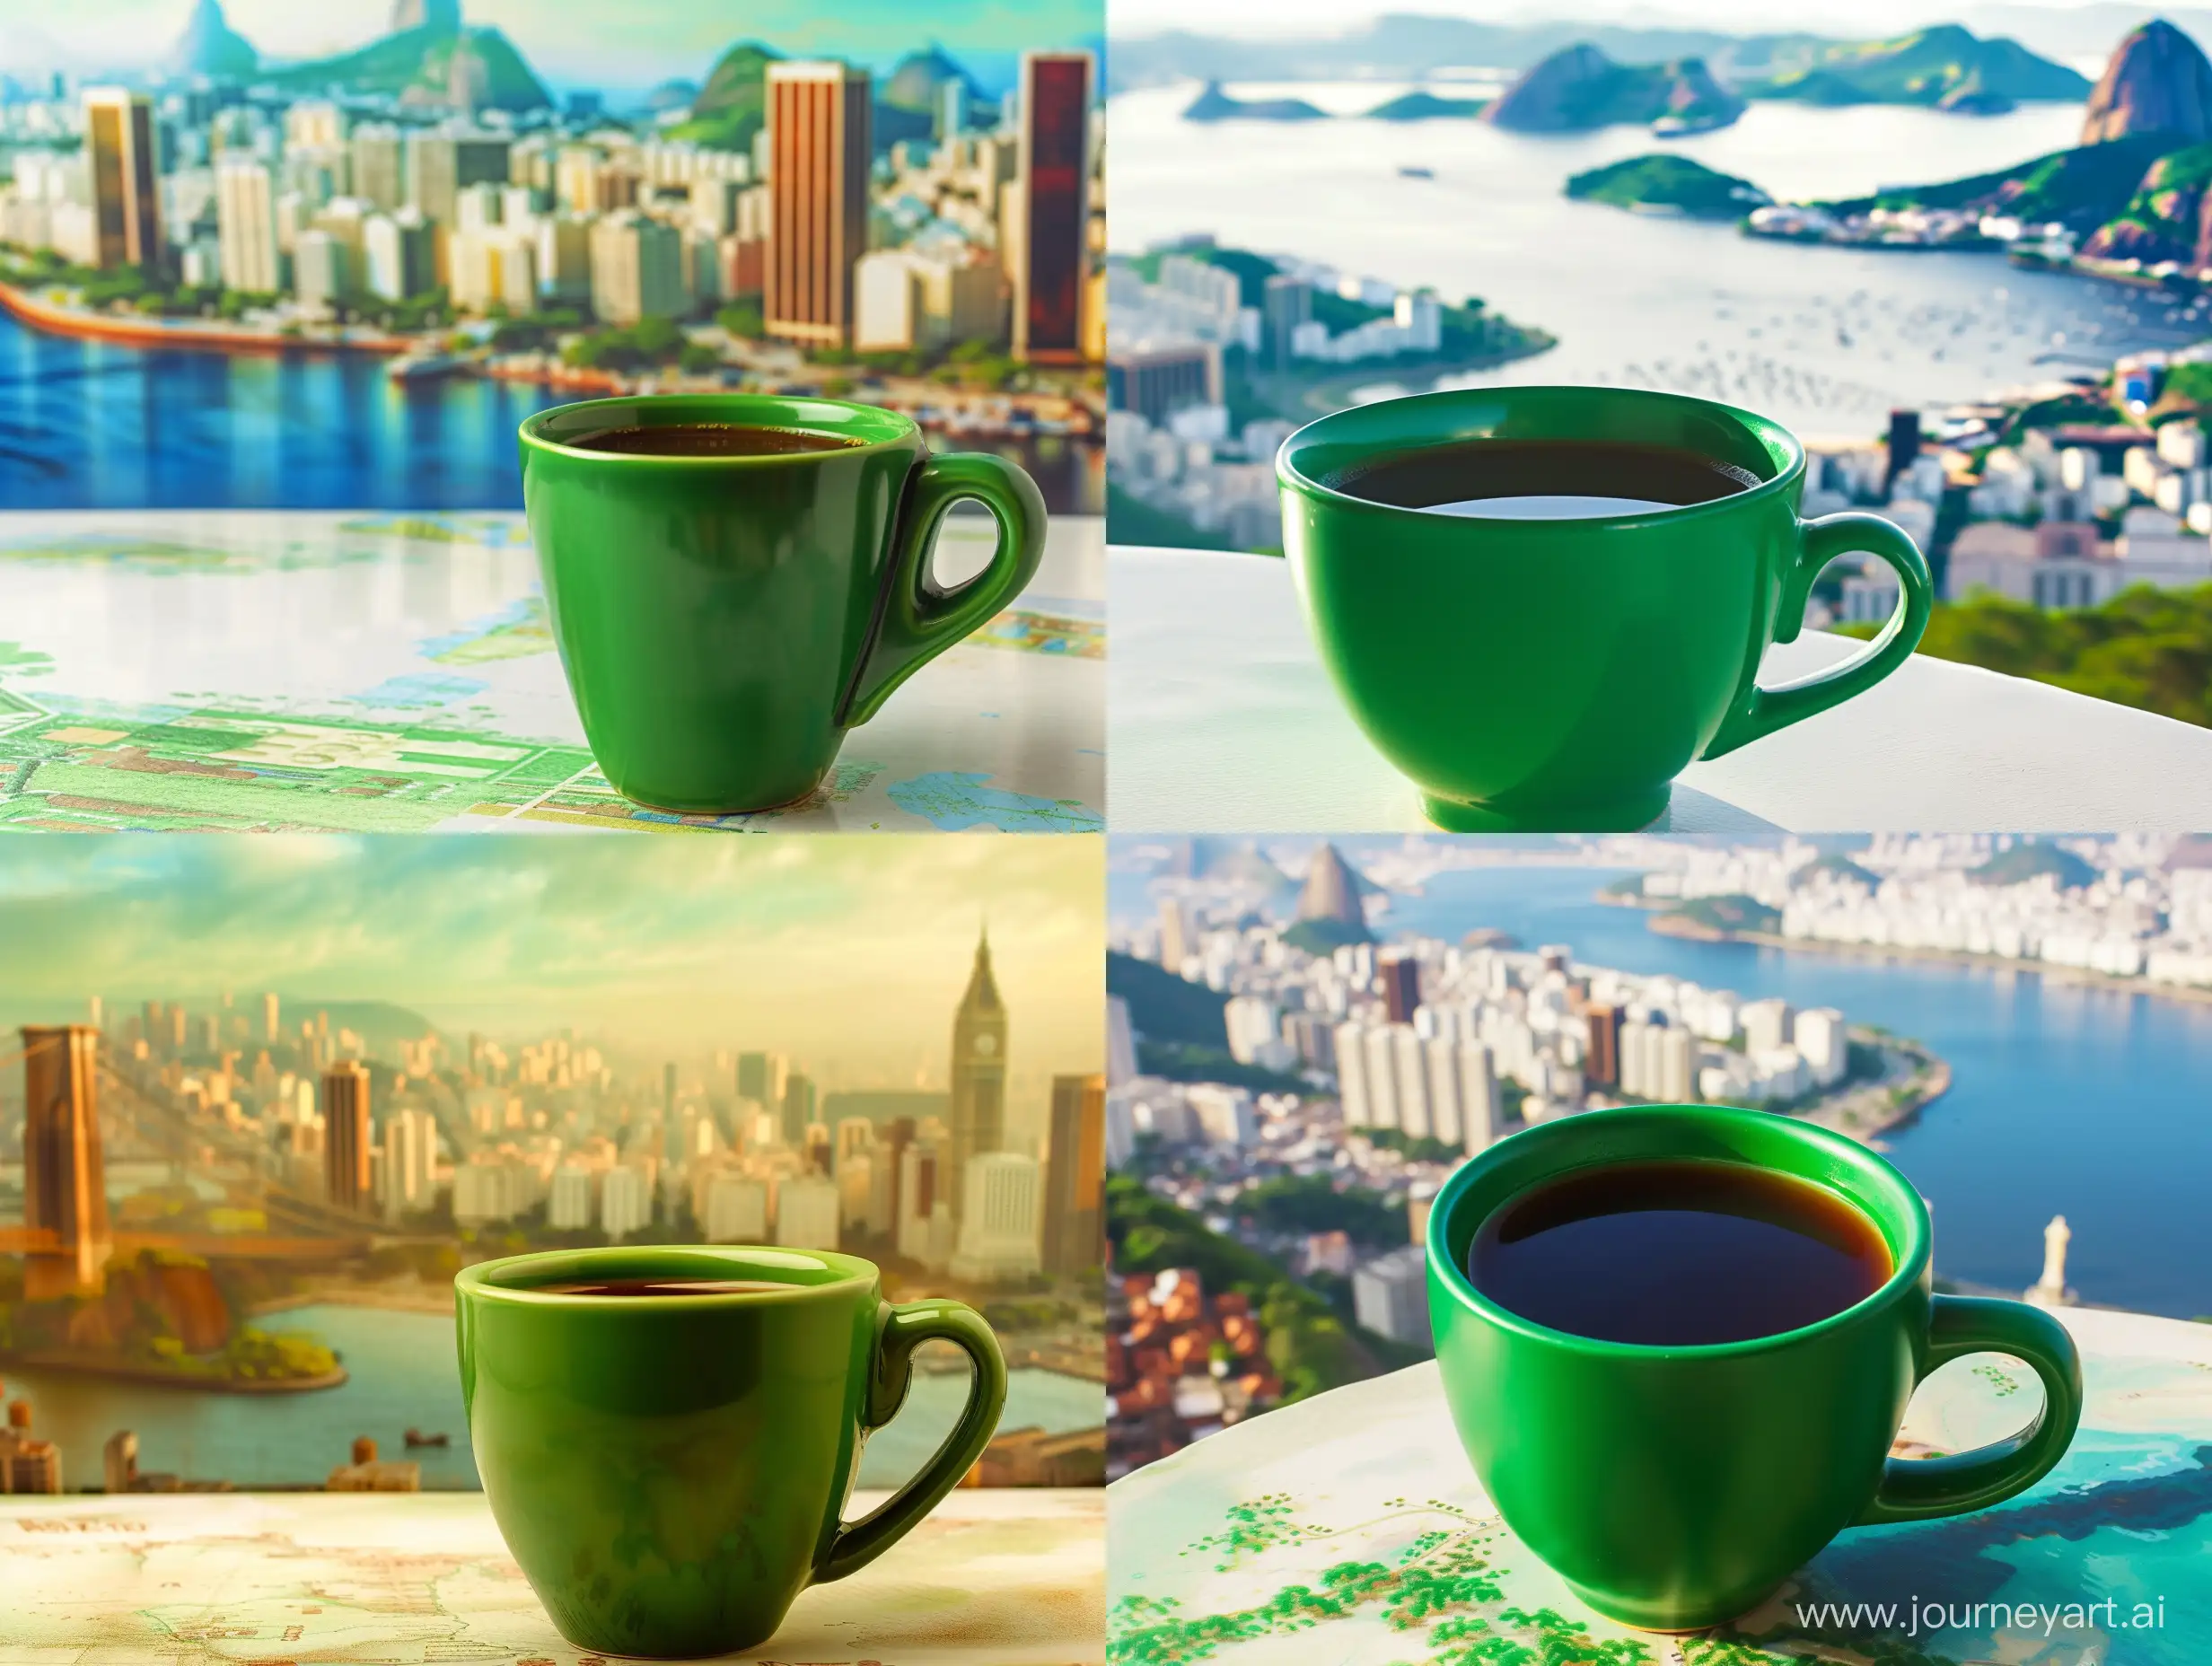 Brazilian-Landmarks-AivazovskyInspired-Green-Coffee-Cup-Tilted